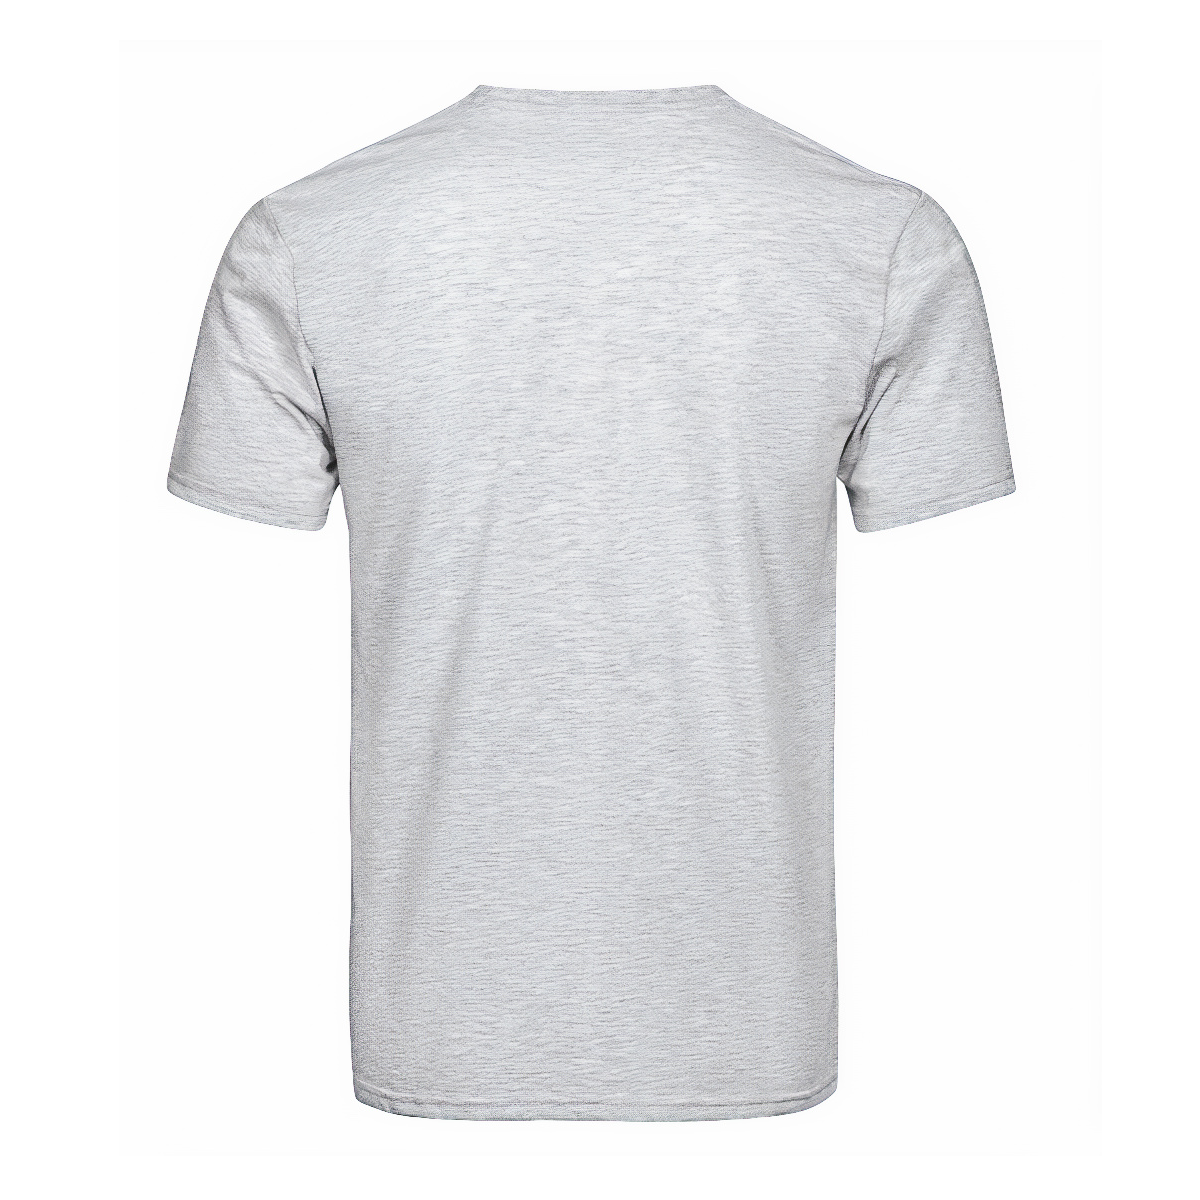 Broun Tartan Crest T-shirt - I'm not yelling style